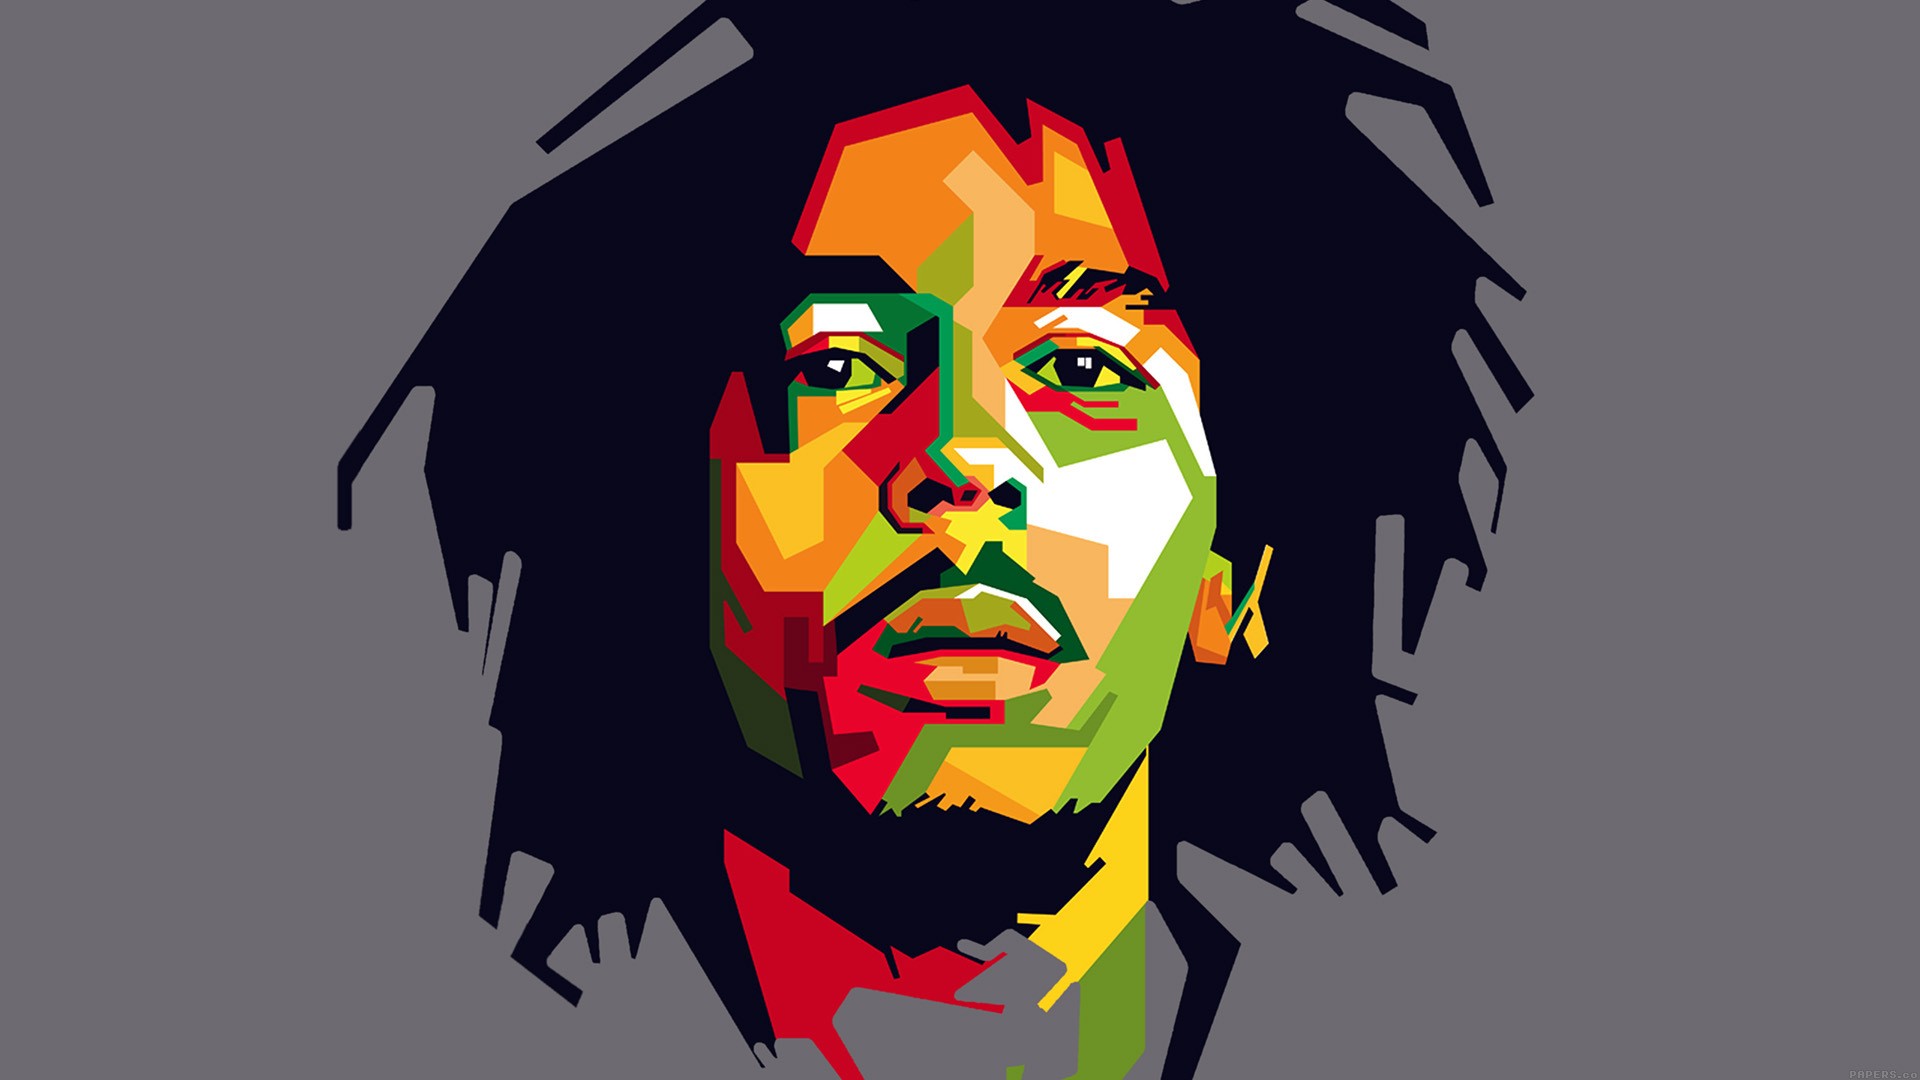  Bob  Marley  wallpaper    Download free beautiful 